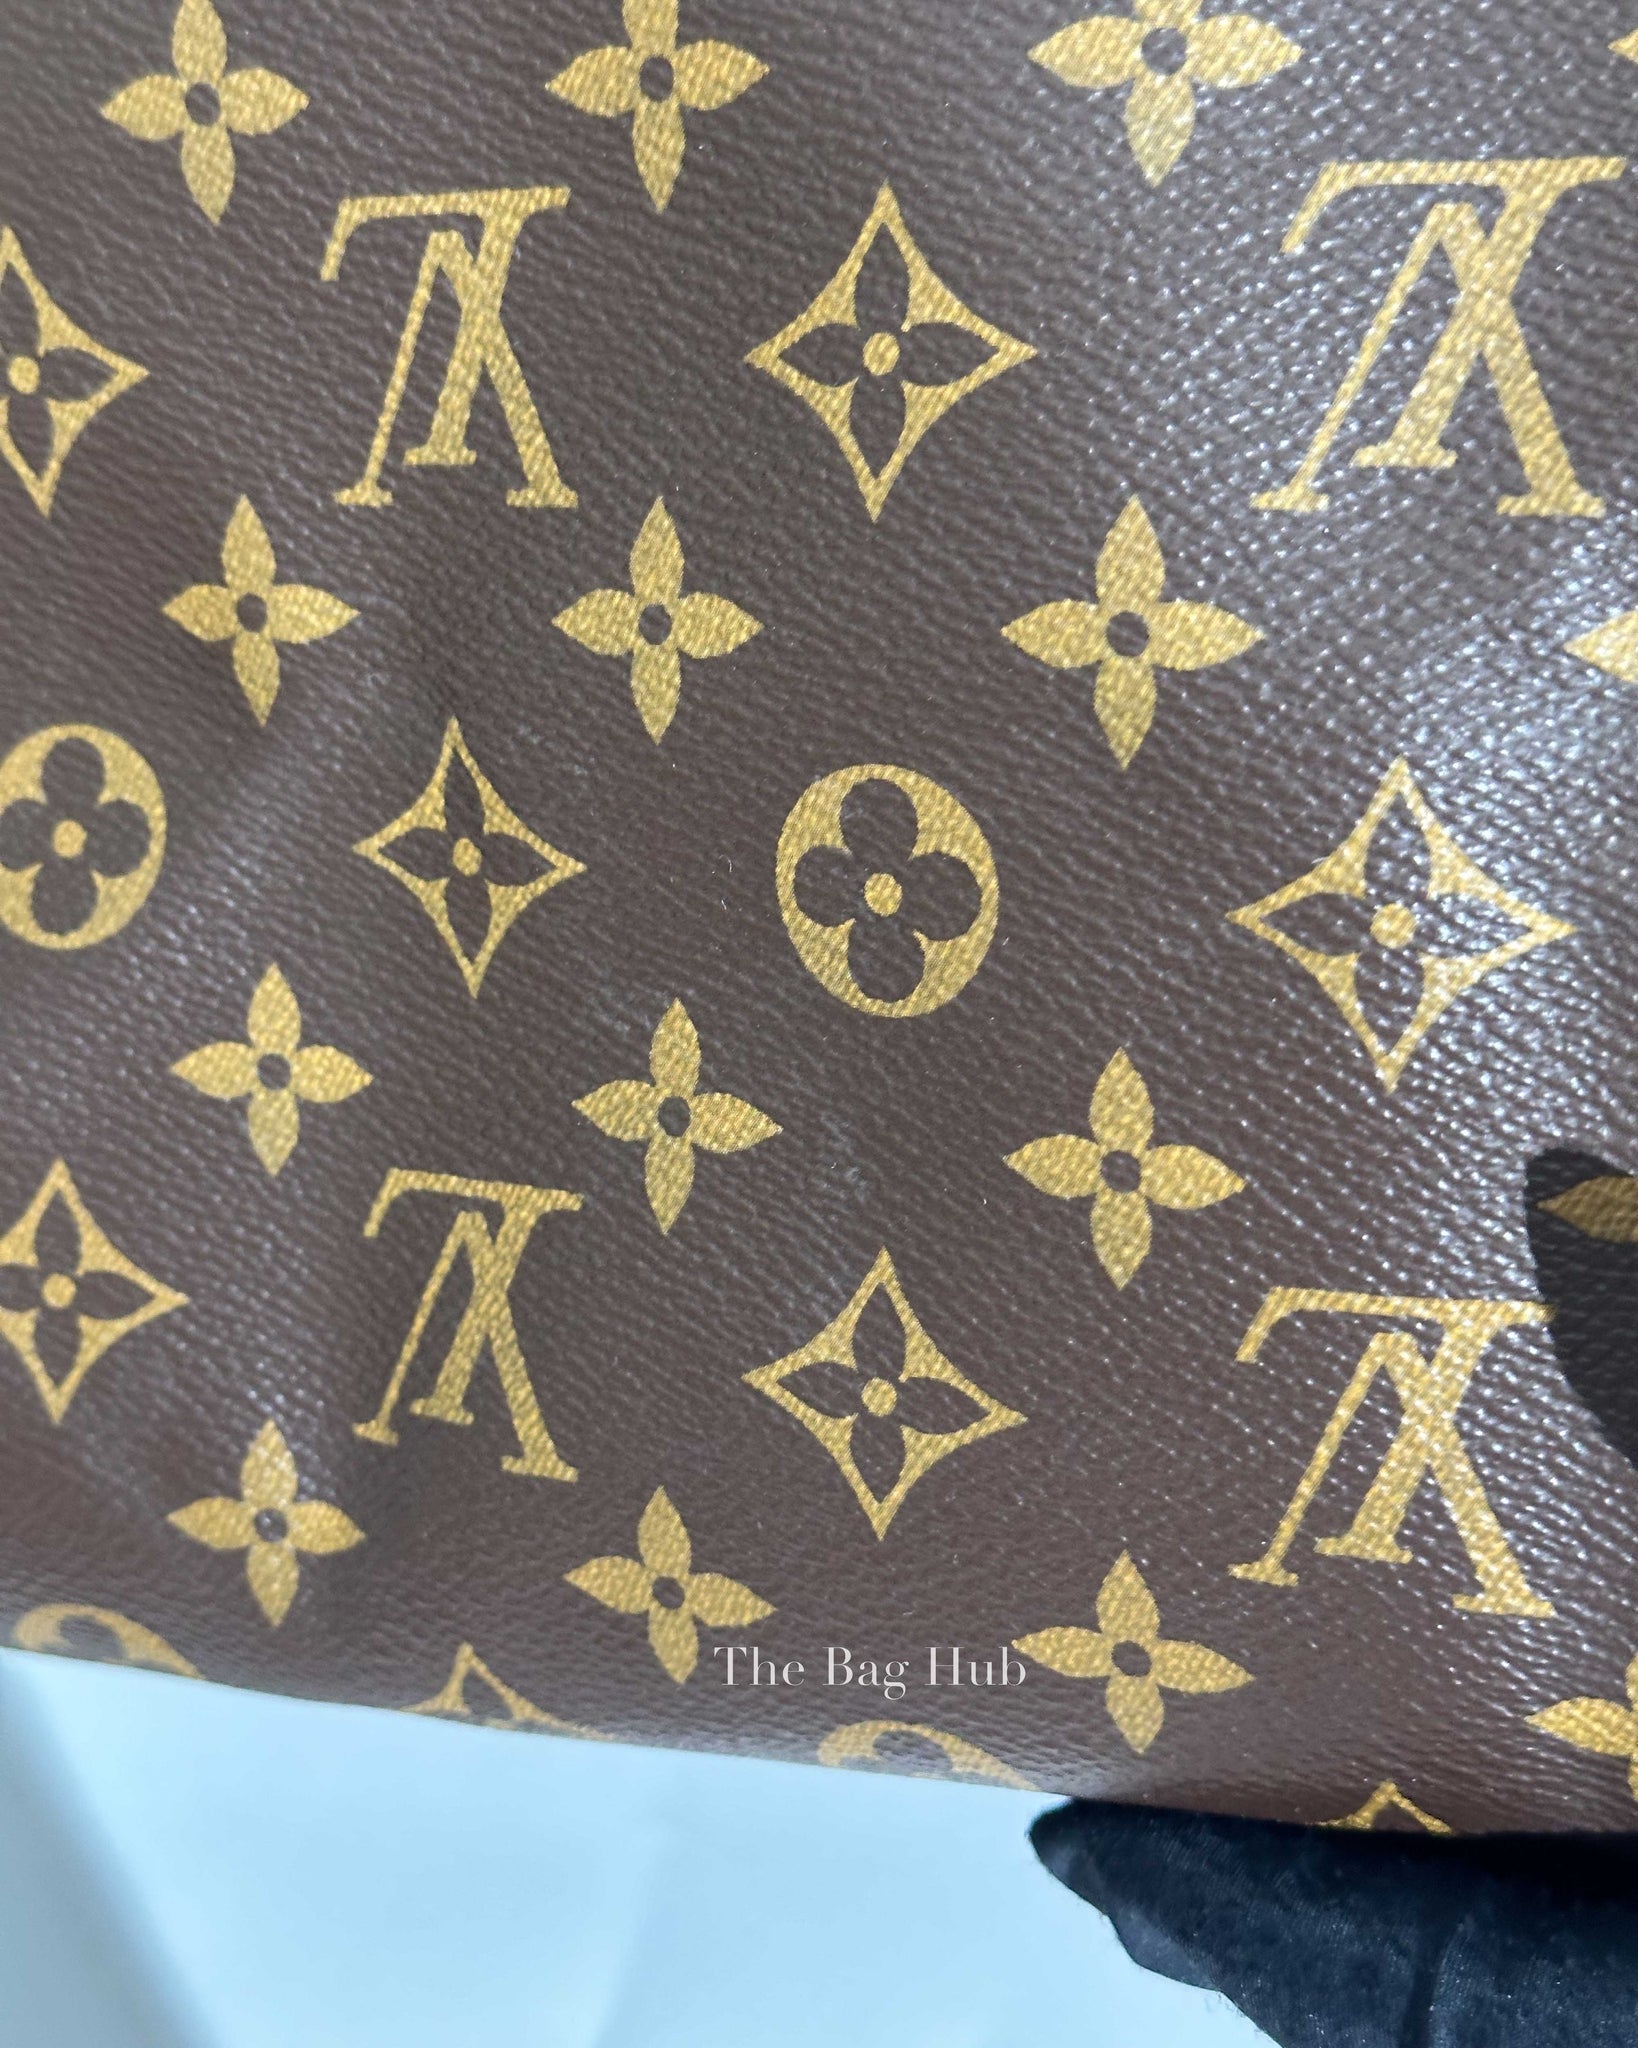 Louis Vuitton Monogram Speedy Bandouliere 30 2Way Handbag